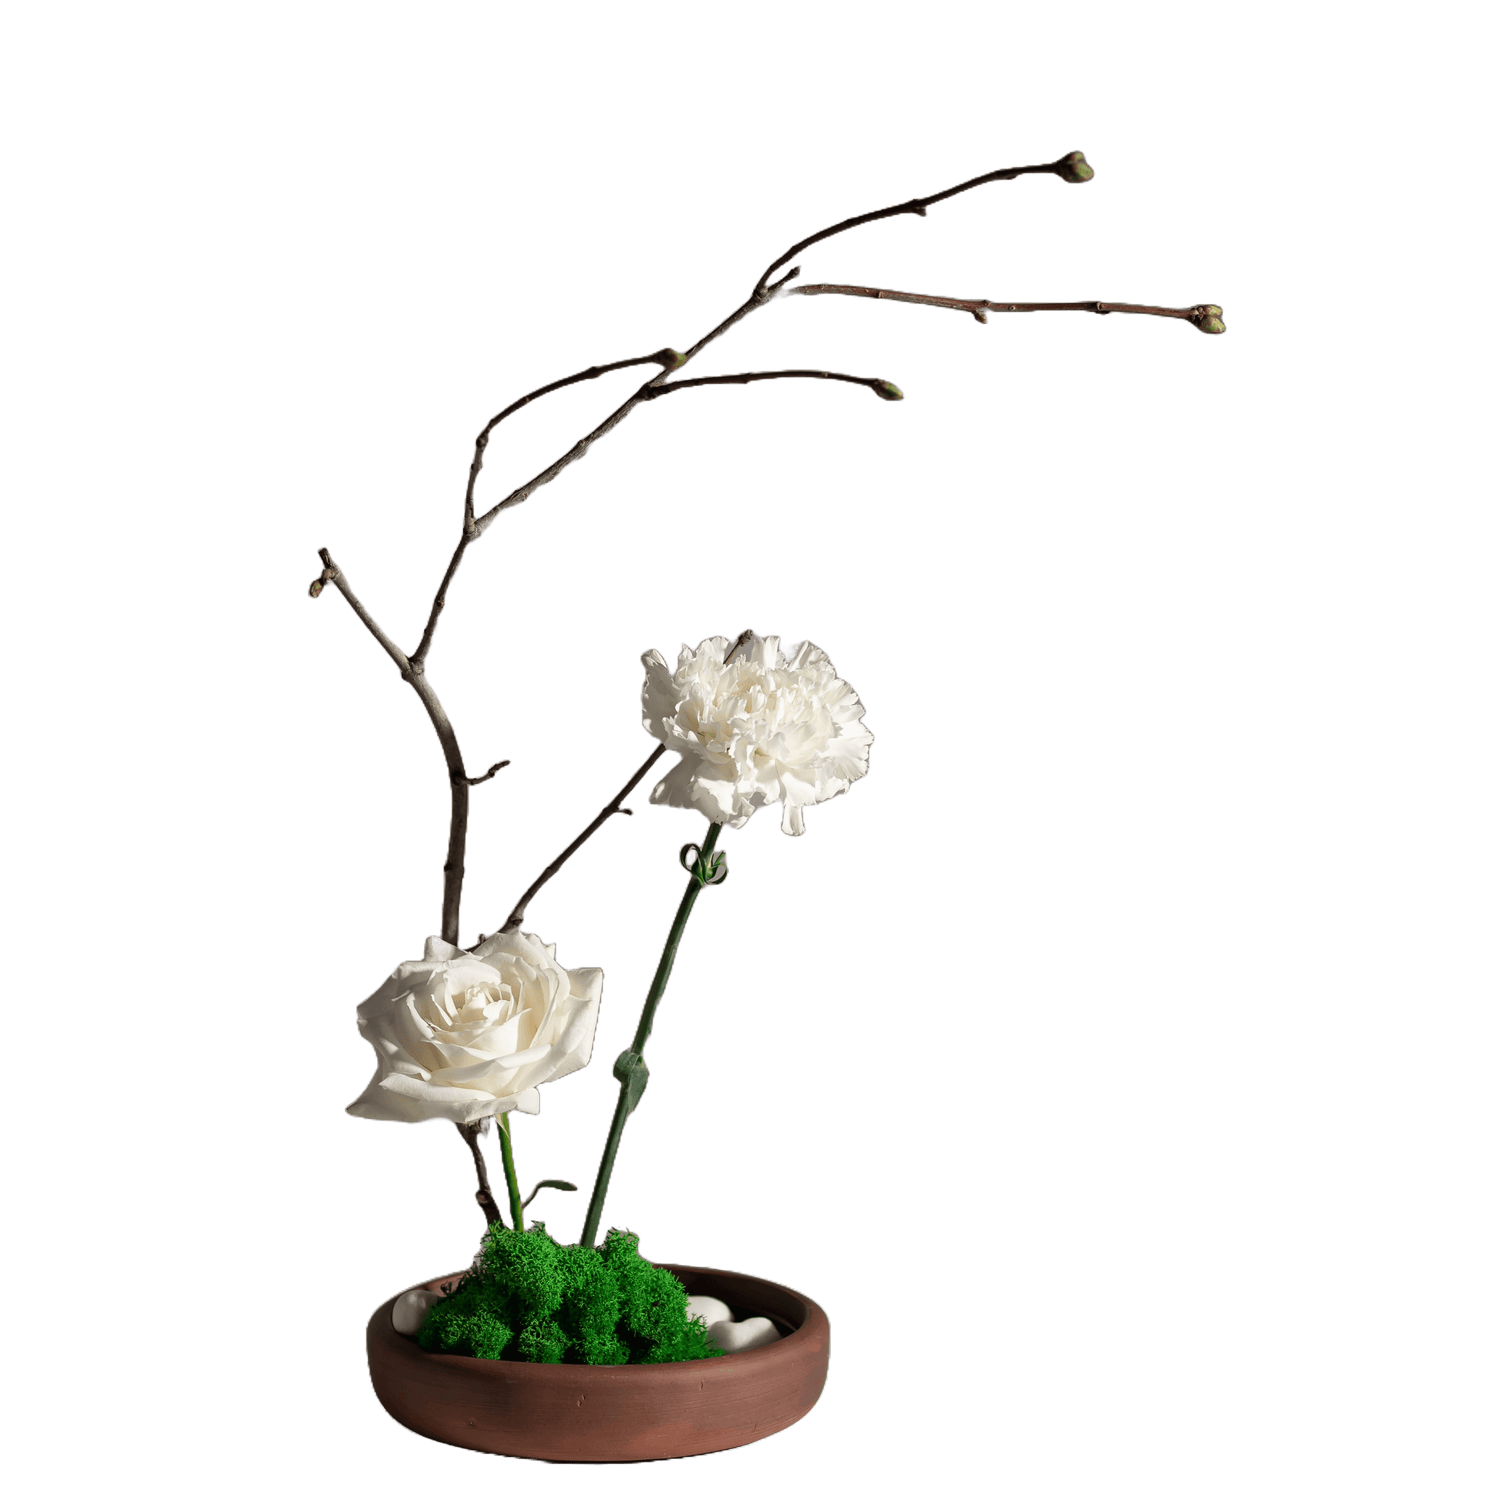 design Ikabana moderne avec deux rose blanches, des branches d'arbres et du lichen en basse.